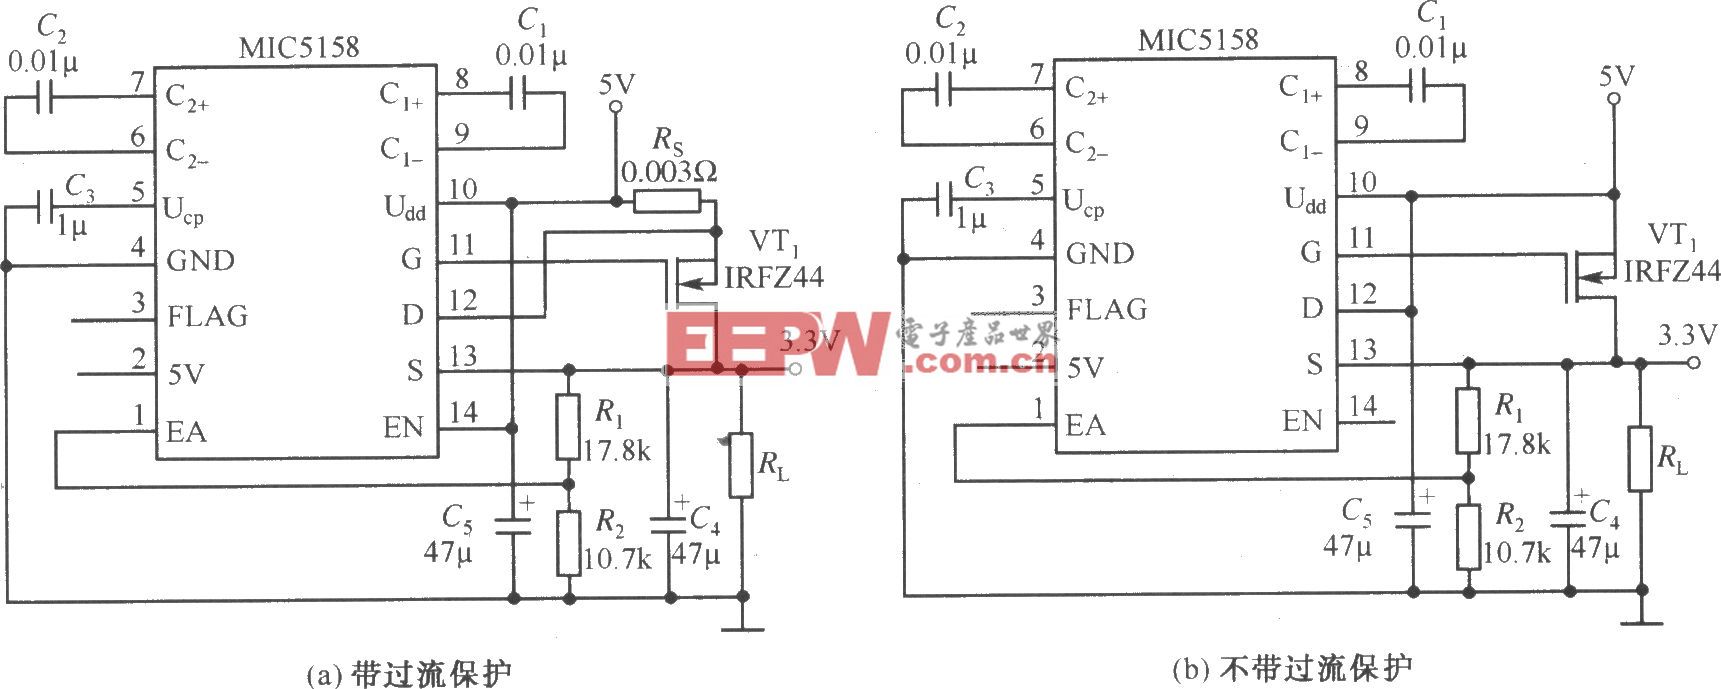 MIC5158构成的外围电路简单的5V输入、3.3V／10A输出的线性稳压器电路